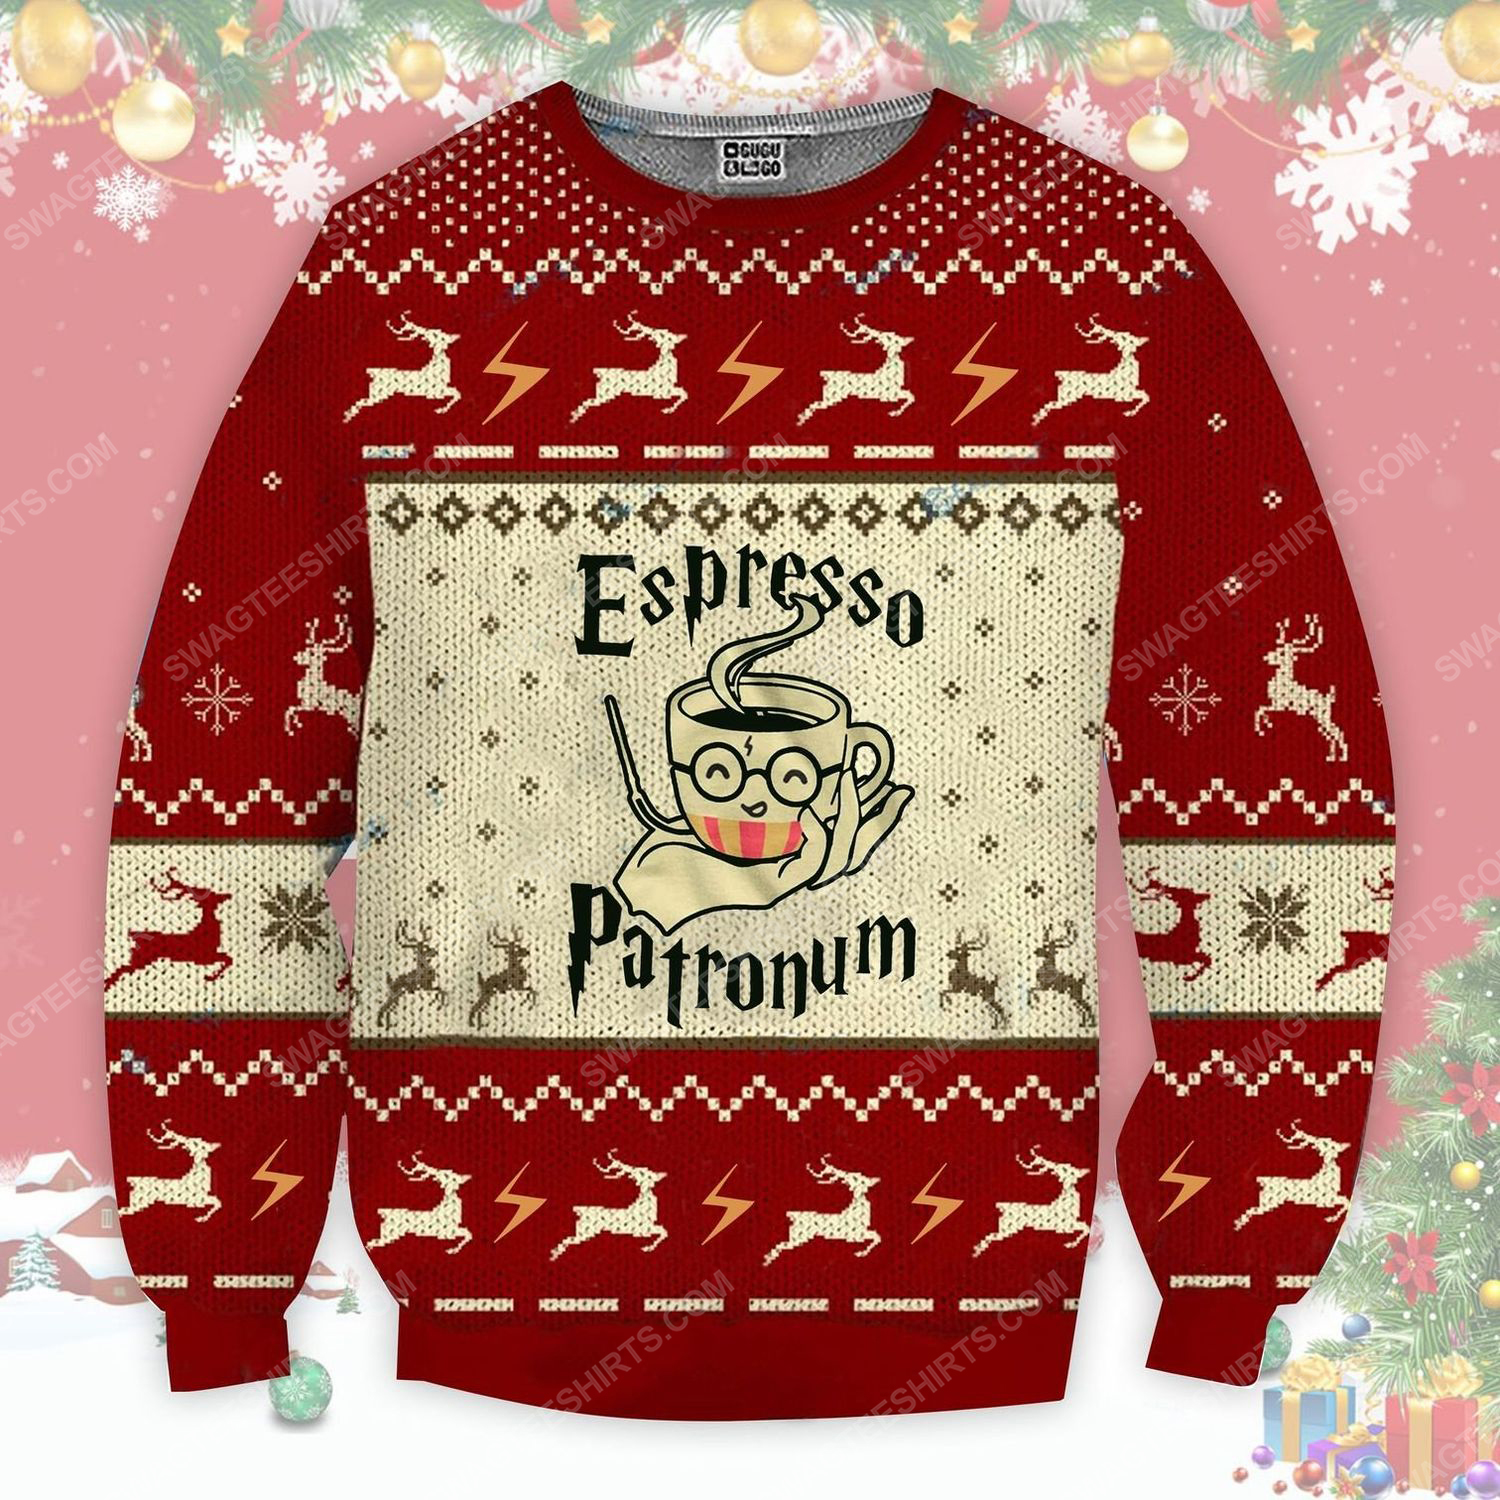 Espresso patronum magical coffee mug harry potter ugly christmas sweater